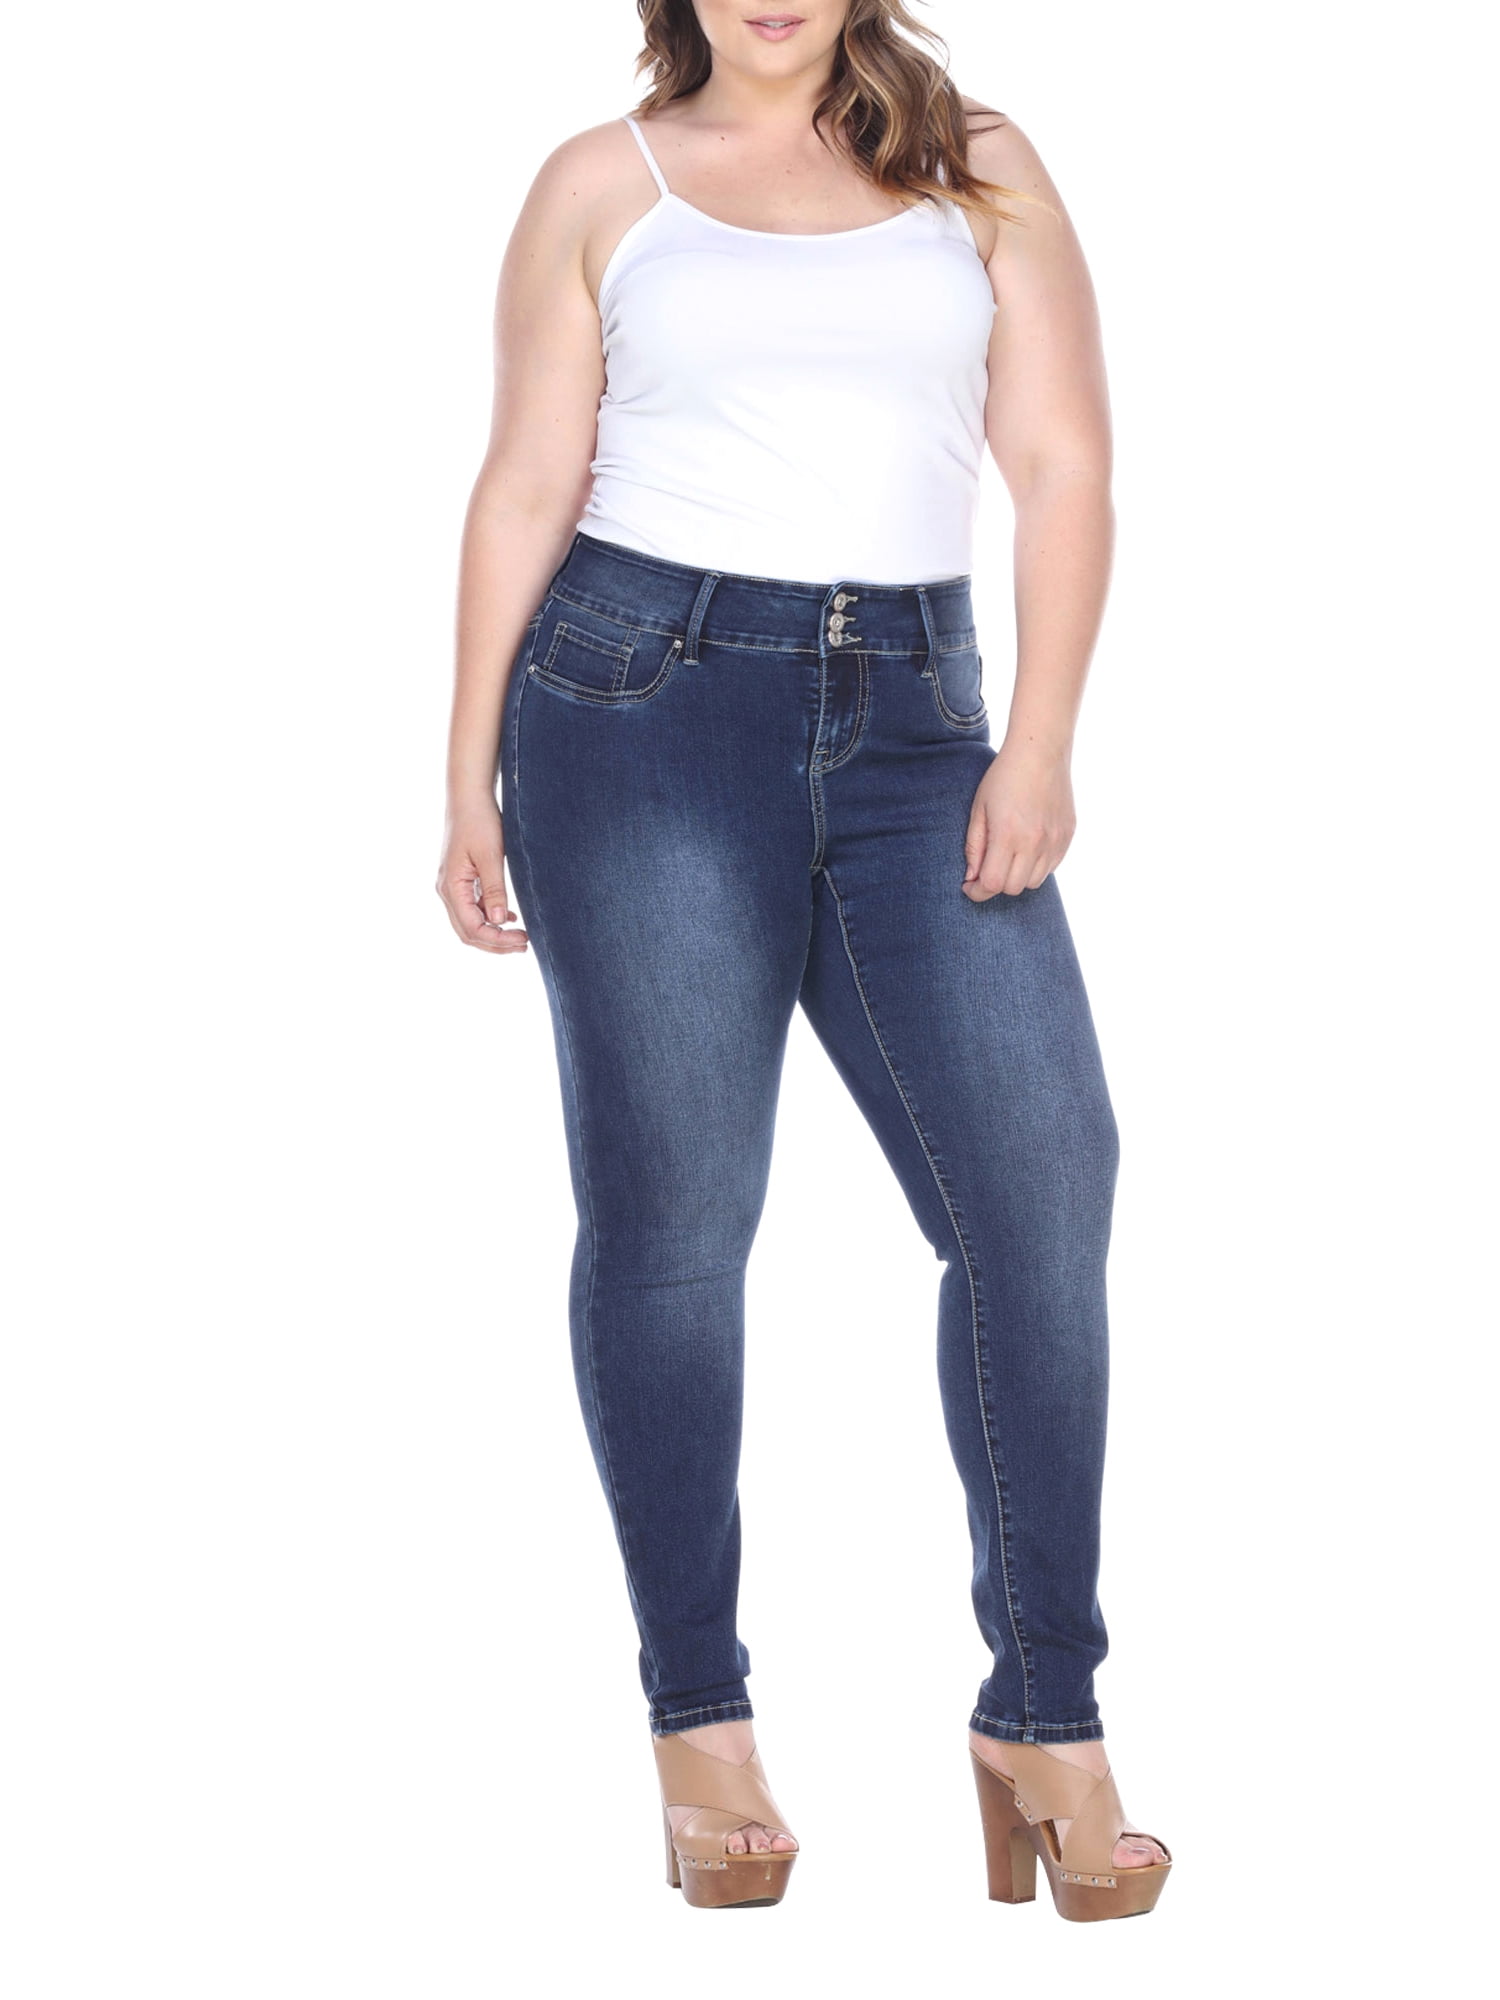 M.Michel Womens Plus Size Jumpsuit Romper Overalls Curvy Blue Denim Butt Lift Jeans Skinny Stretch-R203